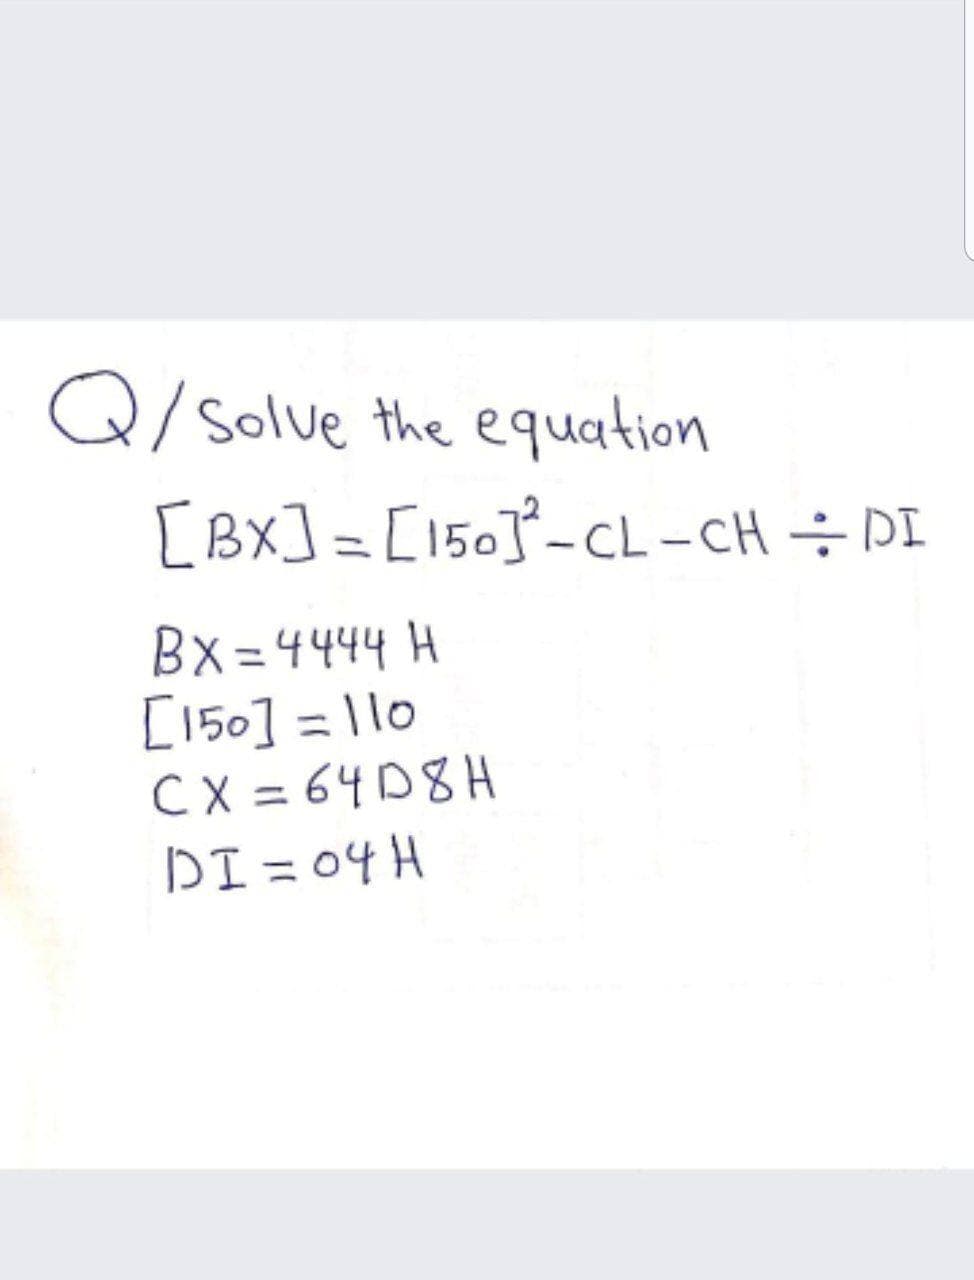 Q/ solve the equation
[Bx] = [150]-CL-CH ÷ DI
|
Bx=4444 H
[150] = 110
C X = 64D8H
DI = 04 H
